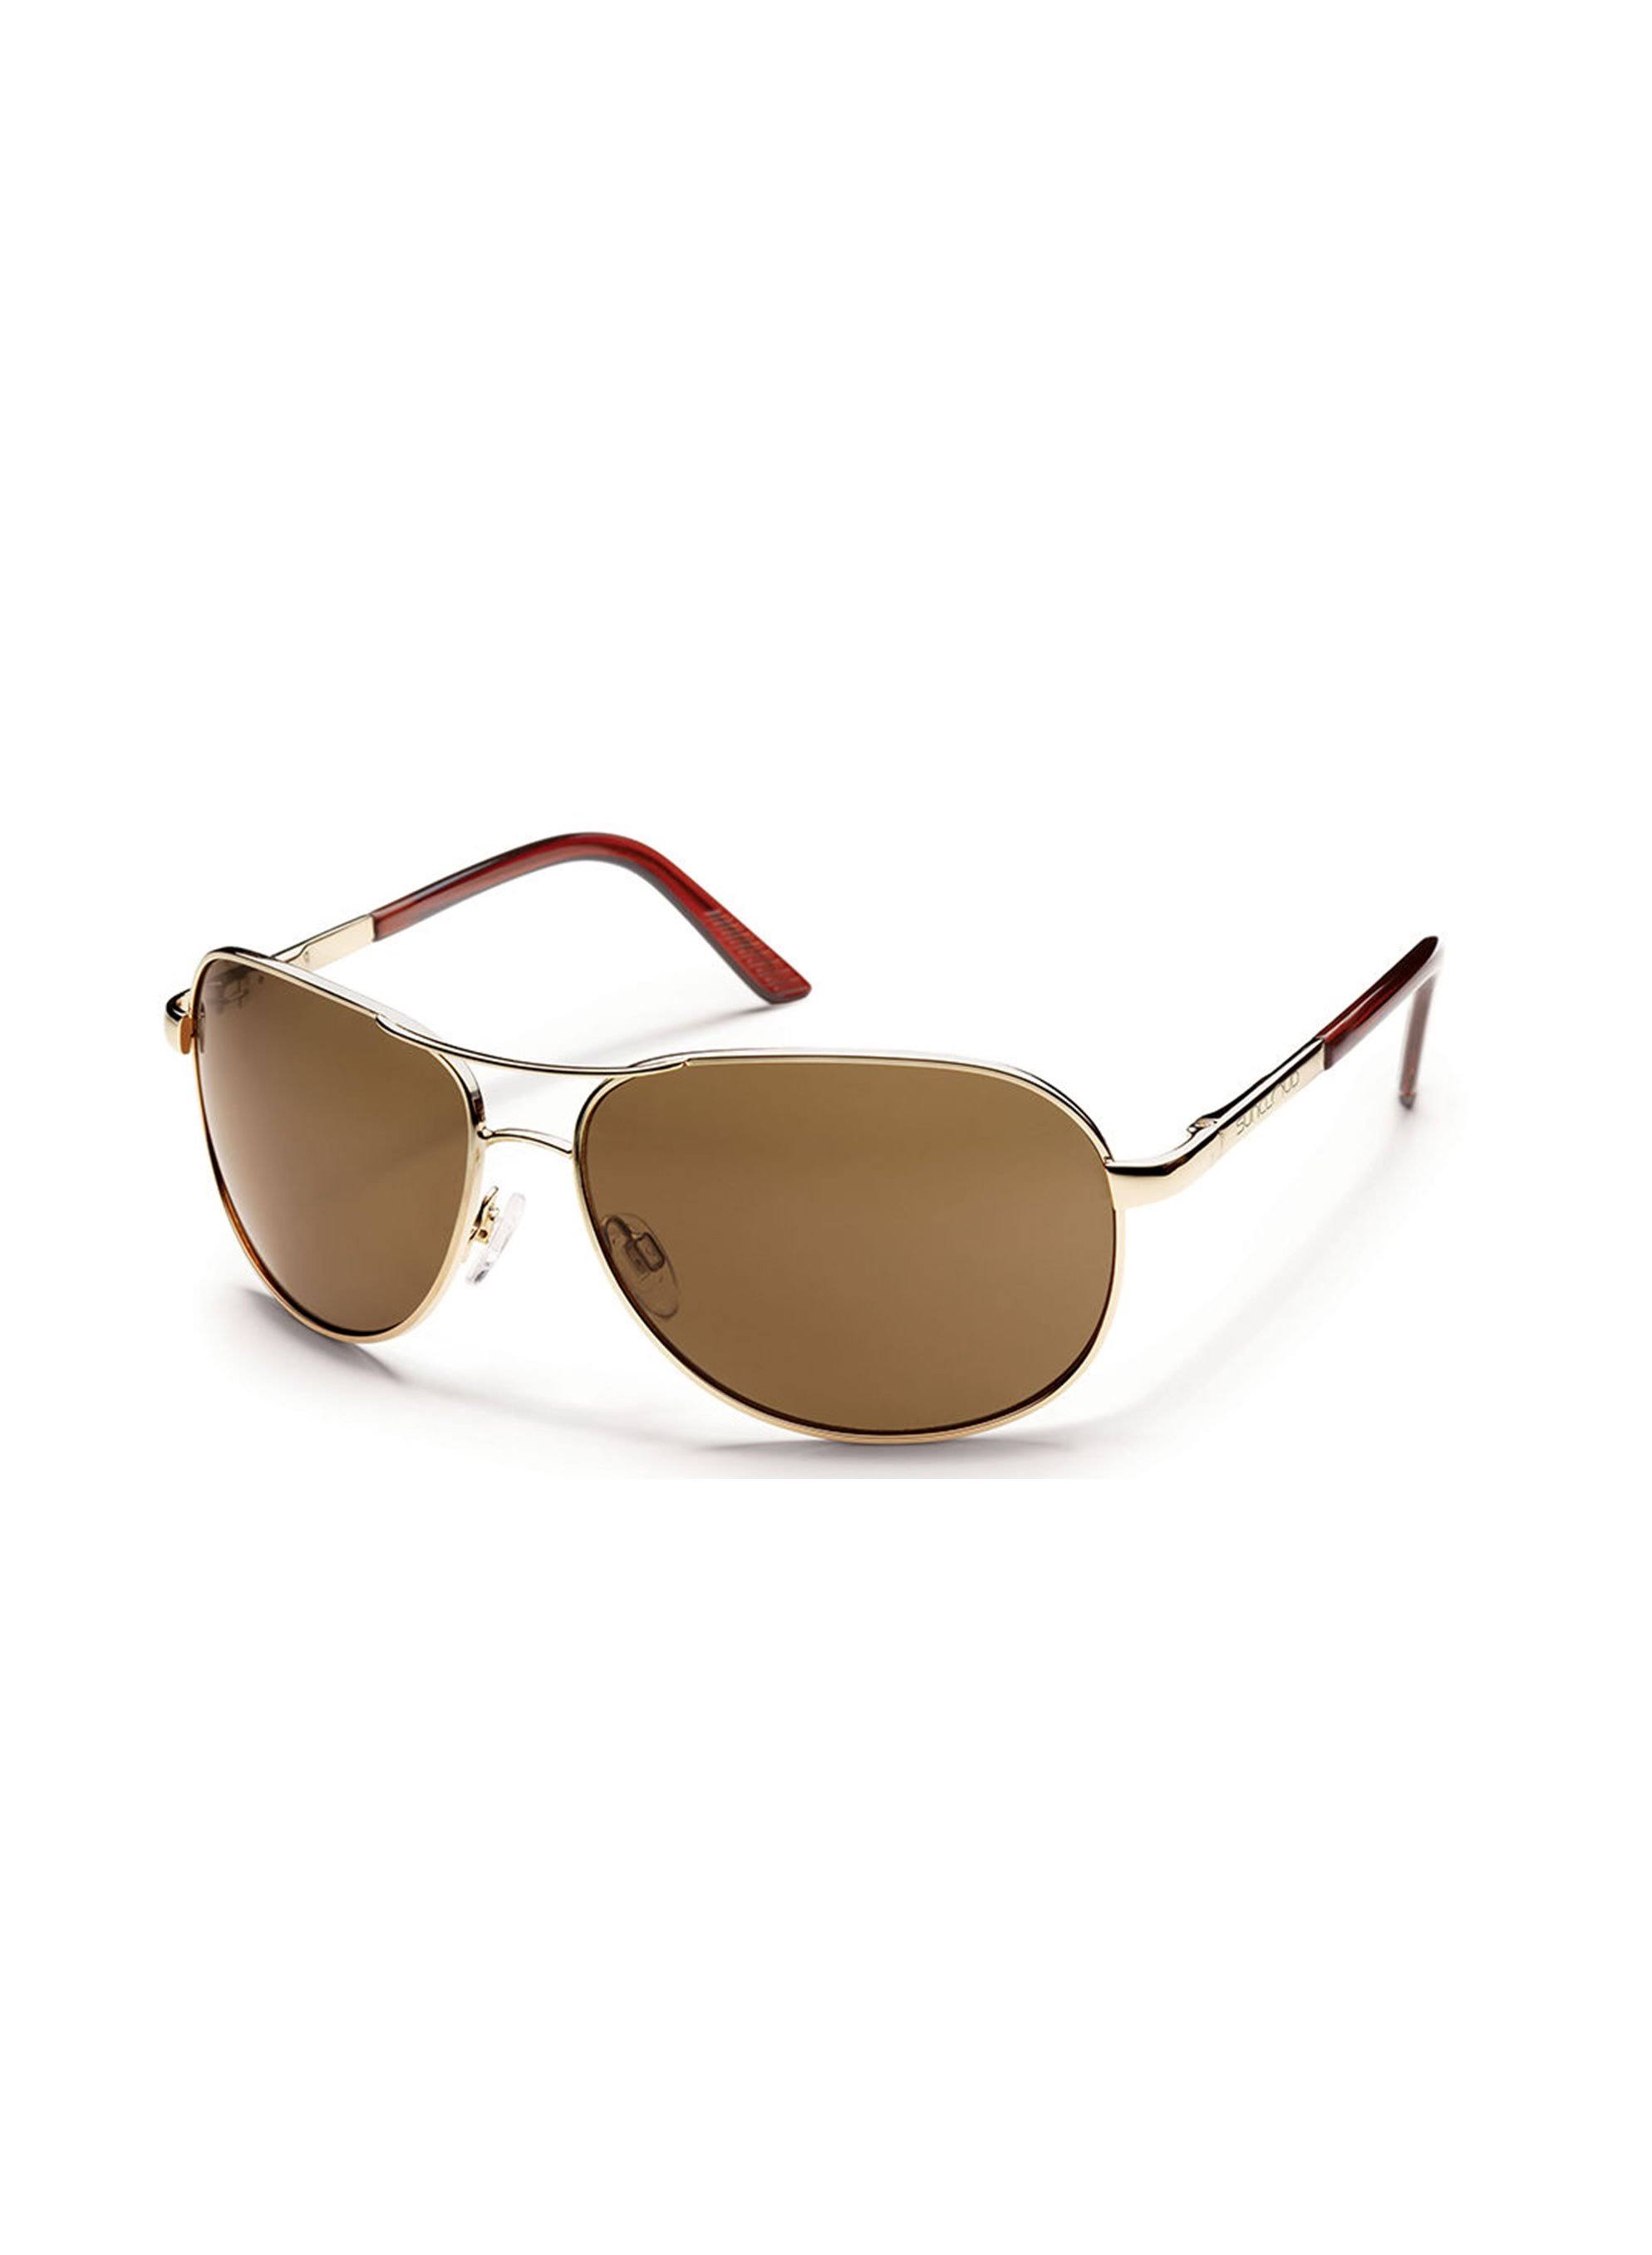 Suncloud Aviator Sunglasses - Gold Frame, Brown Polarized Lens